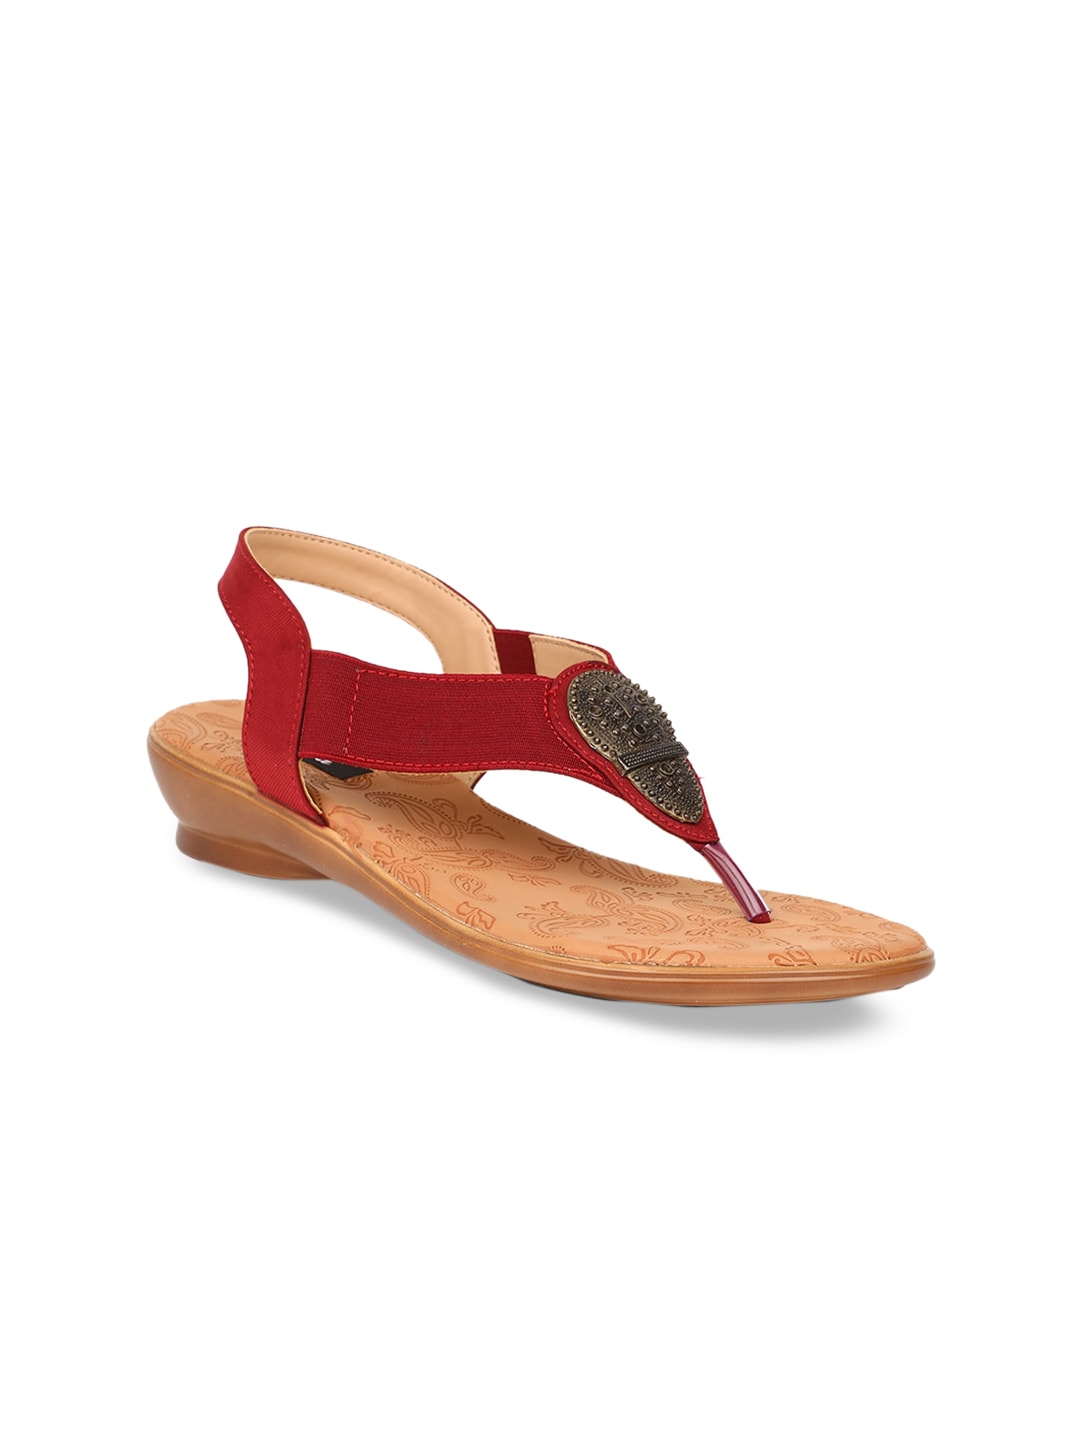 Bata Women Red Embellished Comfort Heels Price in India